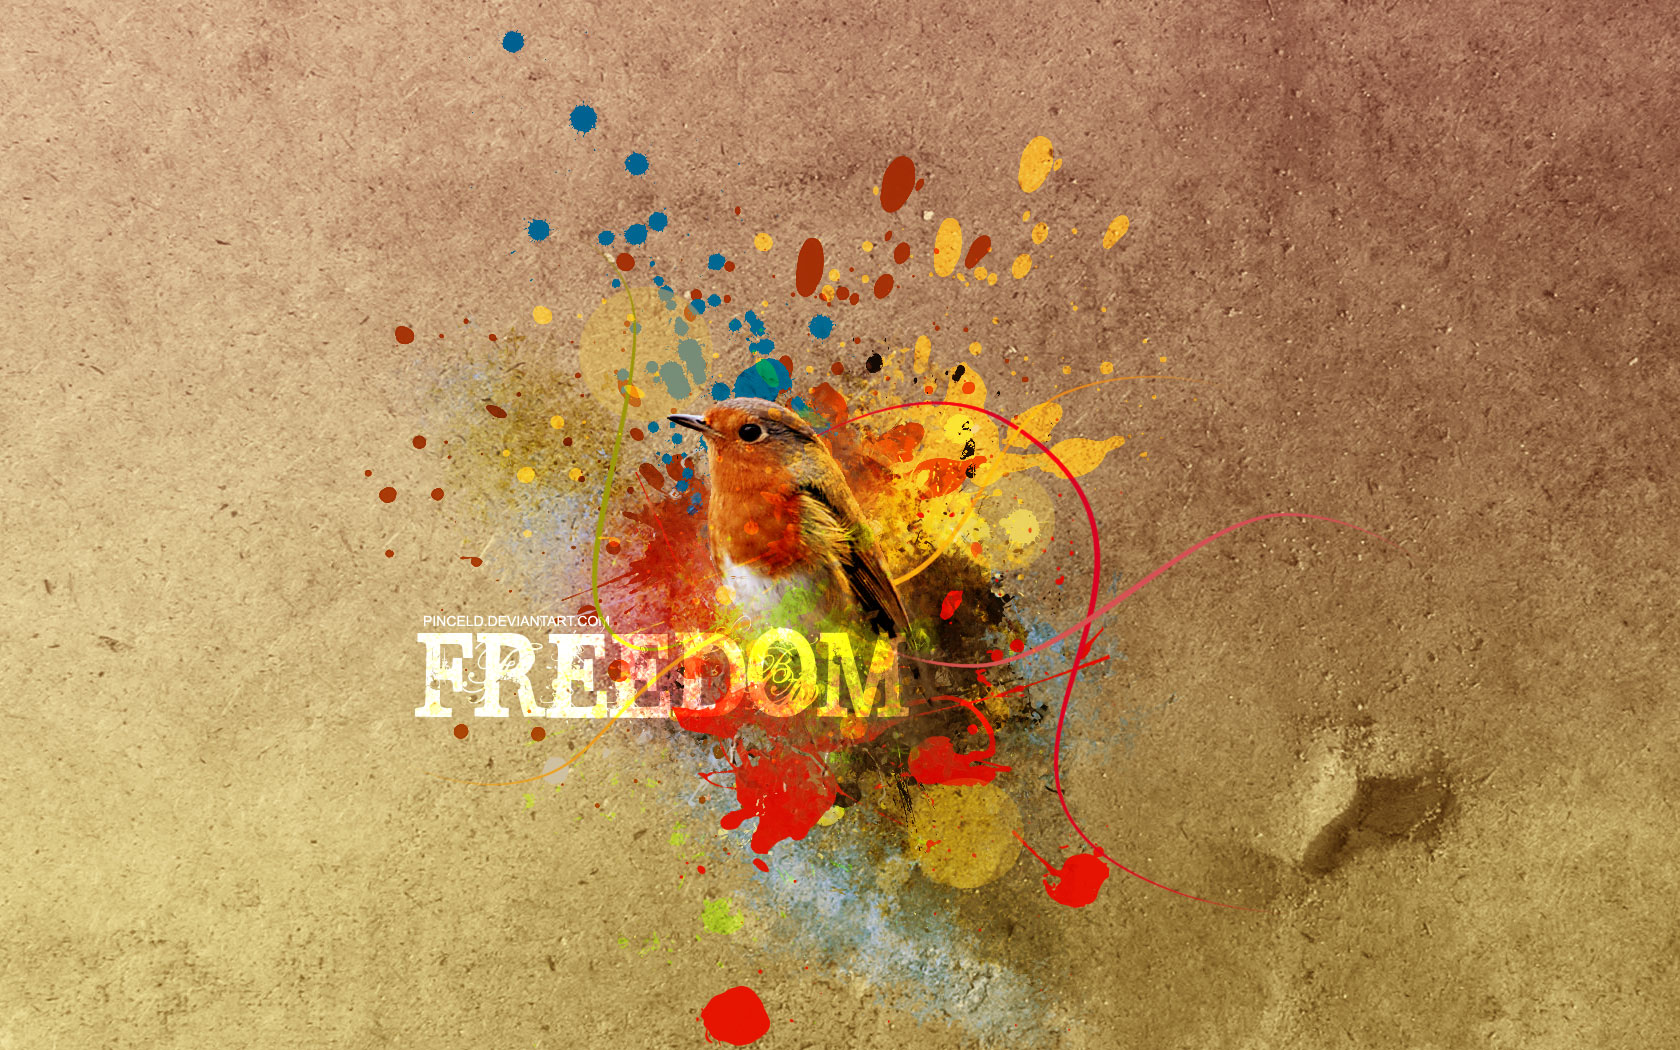 Freedom Wallpaper By Pinceld 1680x1050 pixel Popular HD Wallpaper